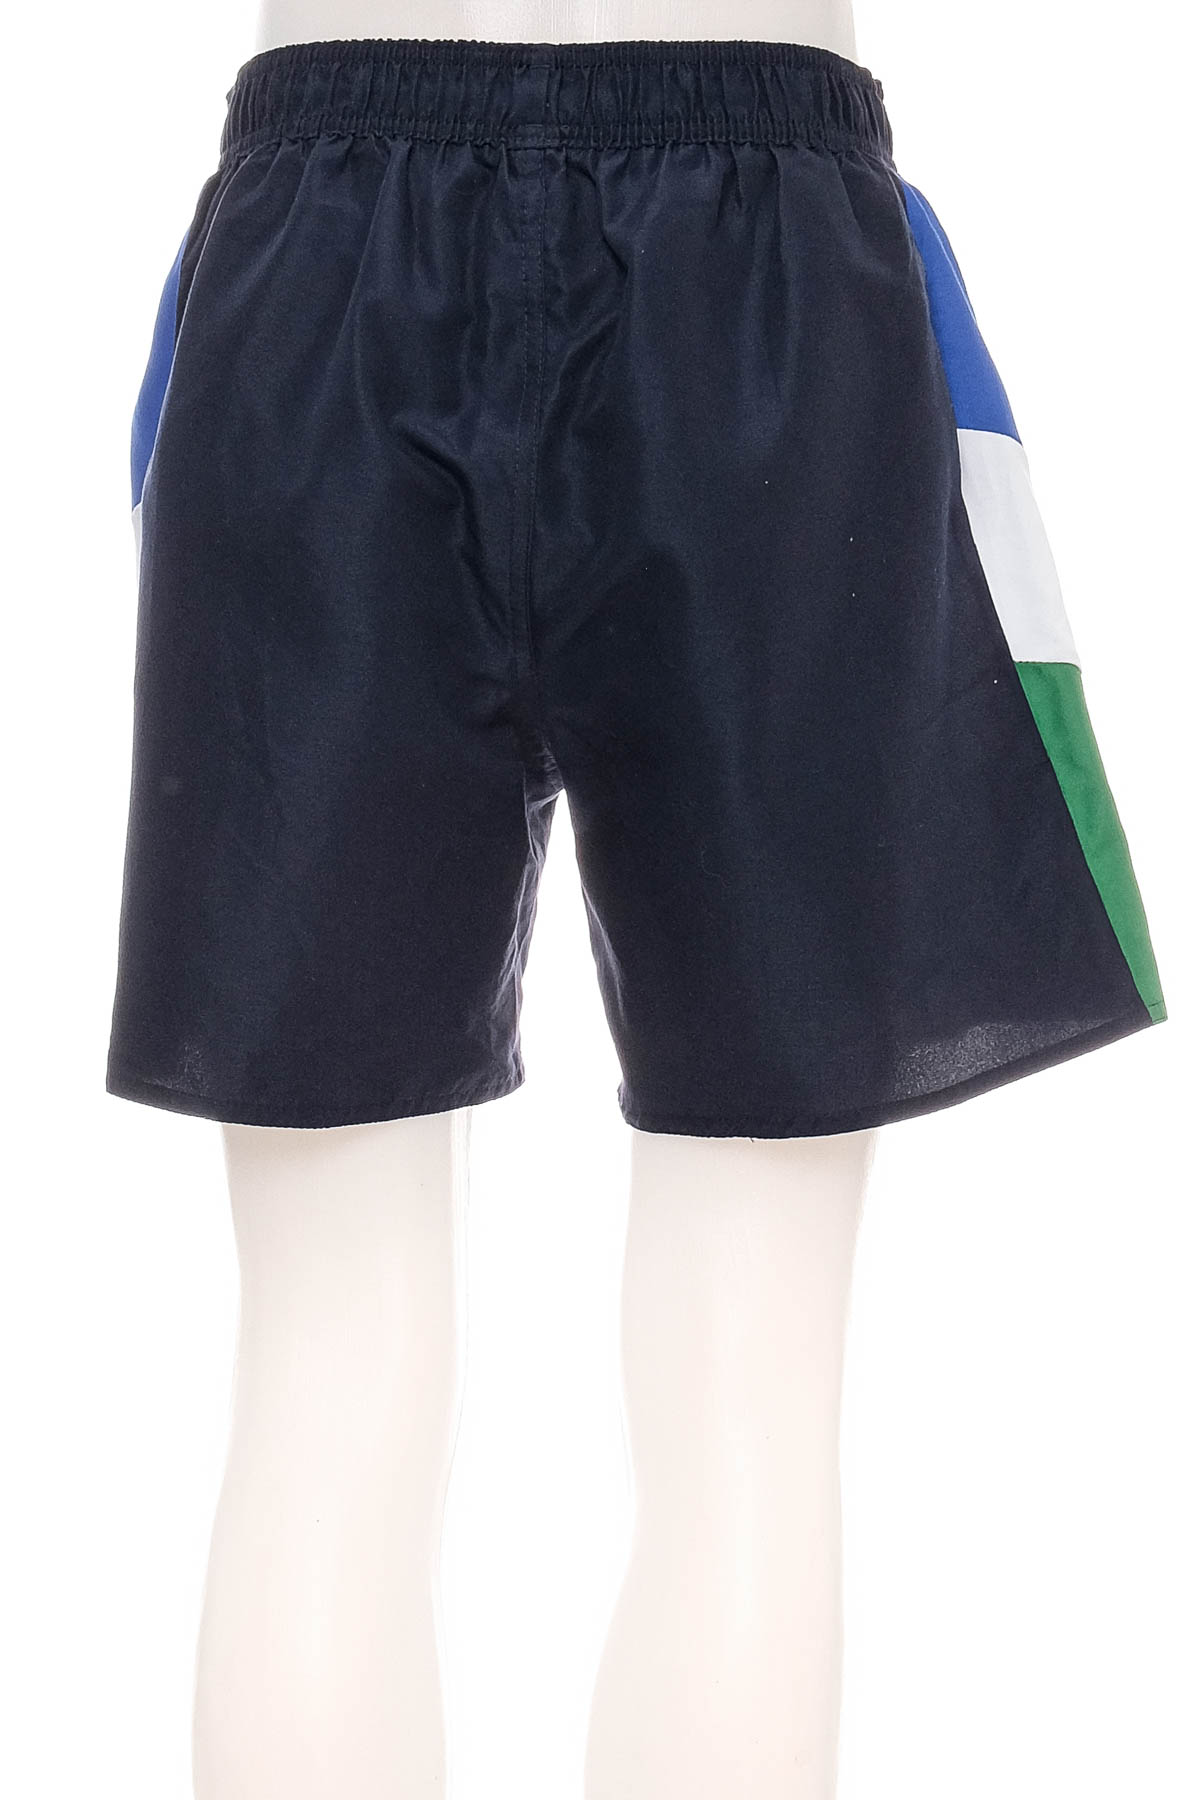 Men's shorts - AproductZ - 1